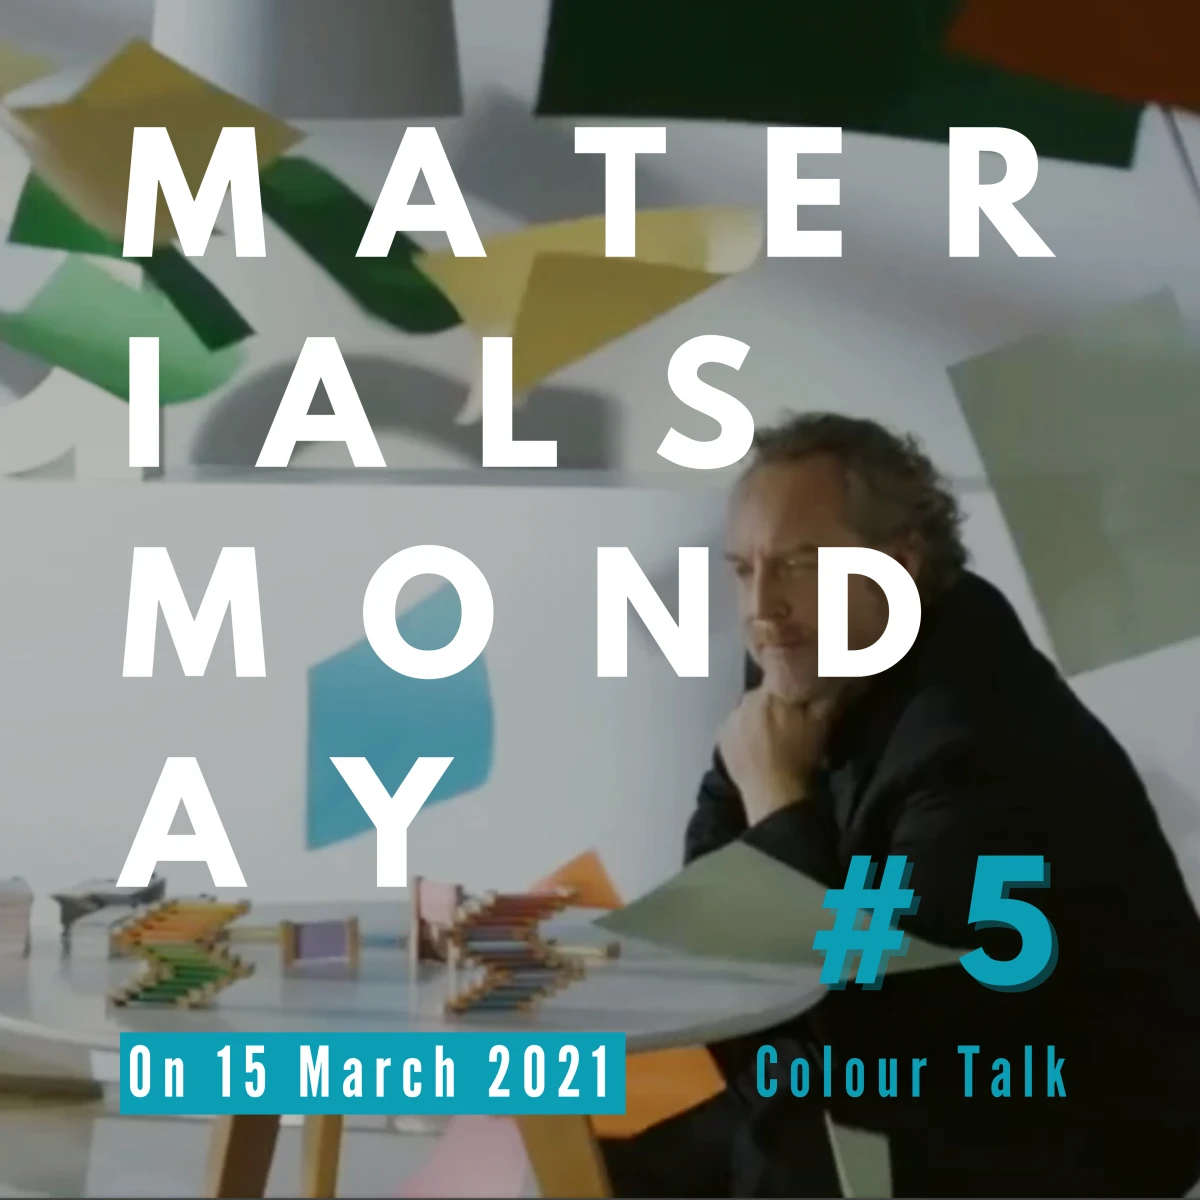 Materials Monday # 6 Colour Talk   with Karl Johan Bertilsson MRKRL, Stockholm